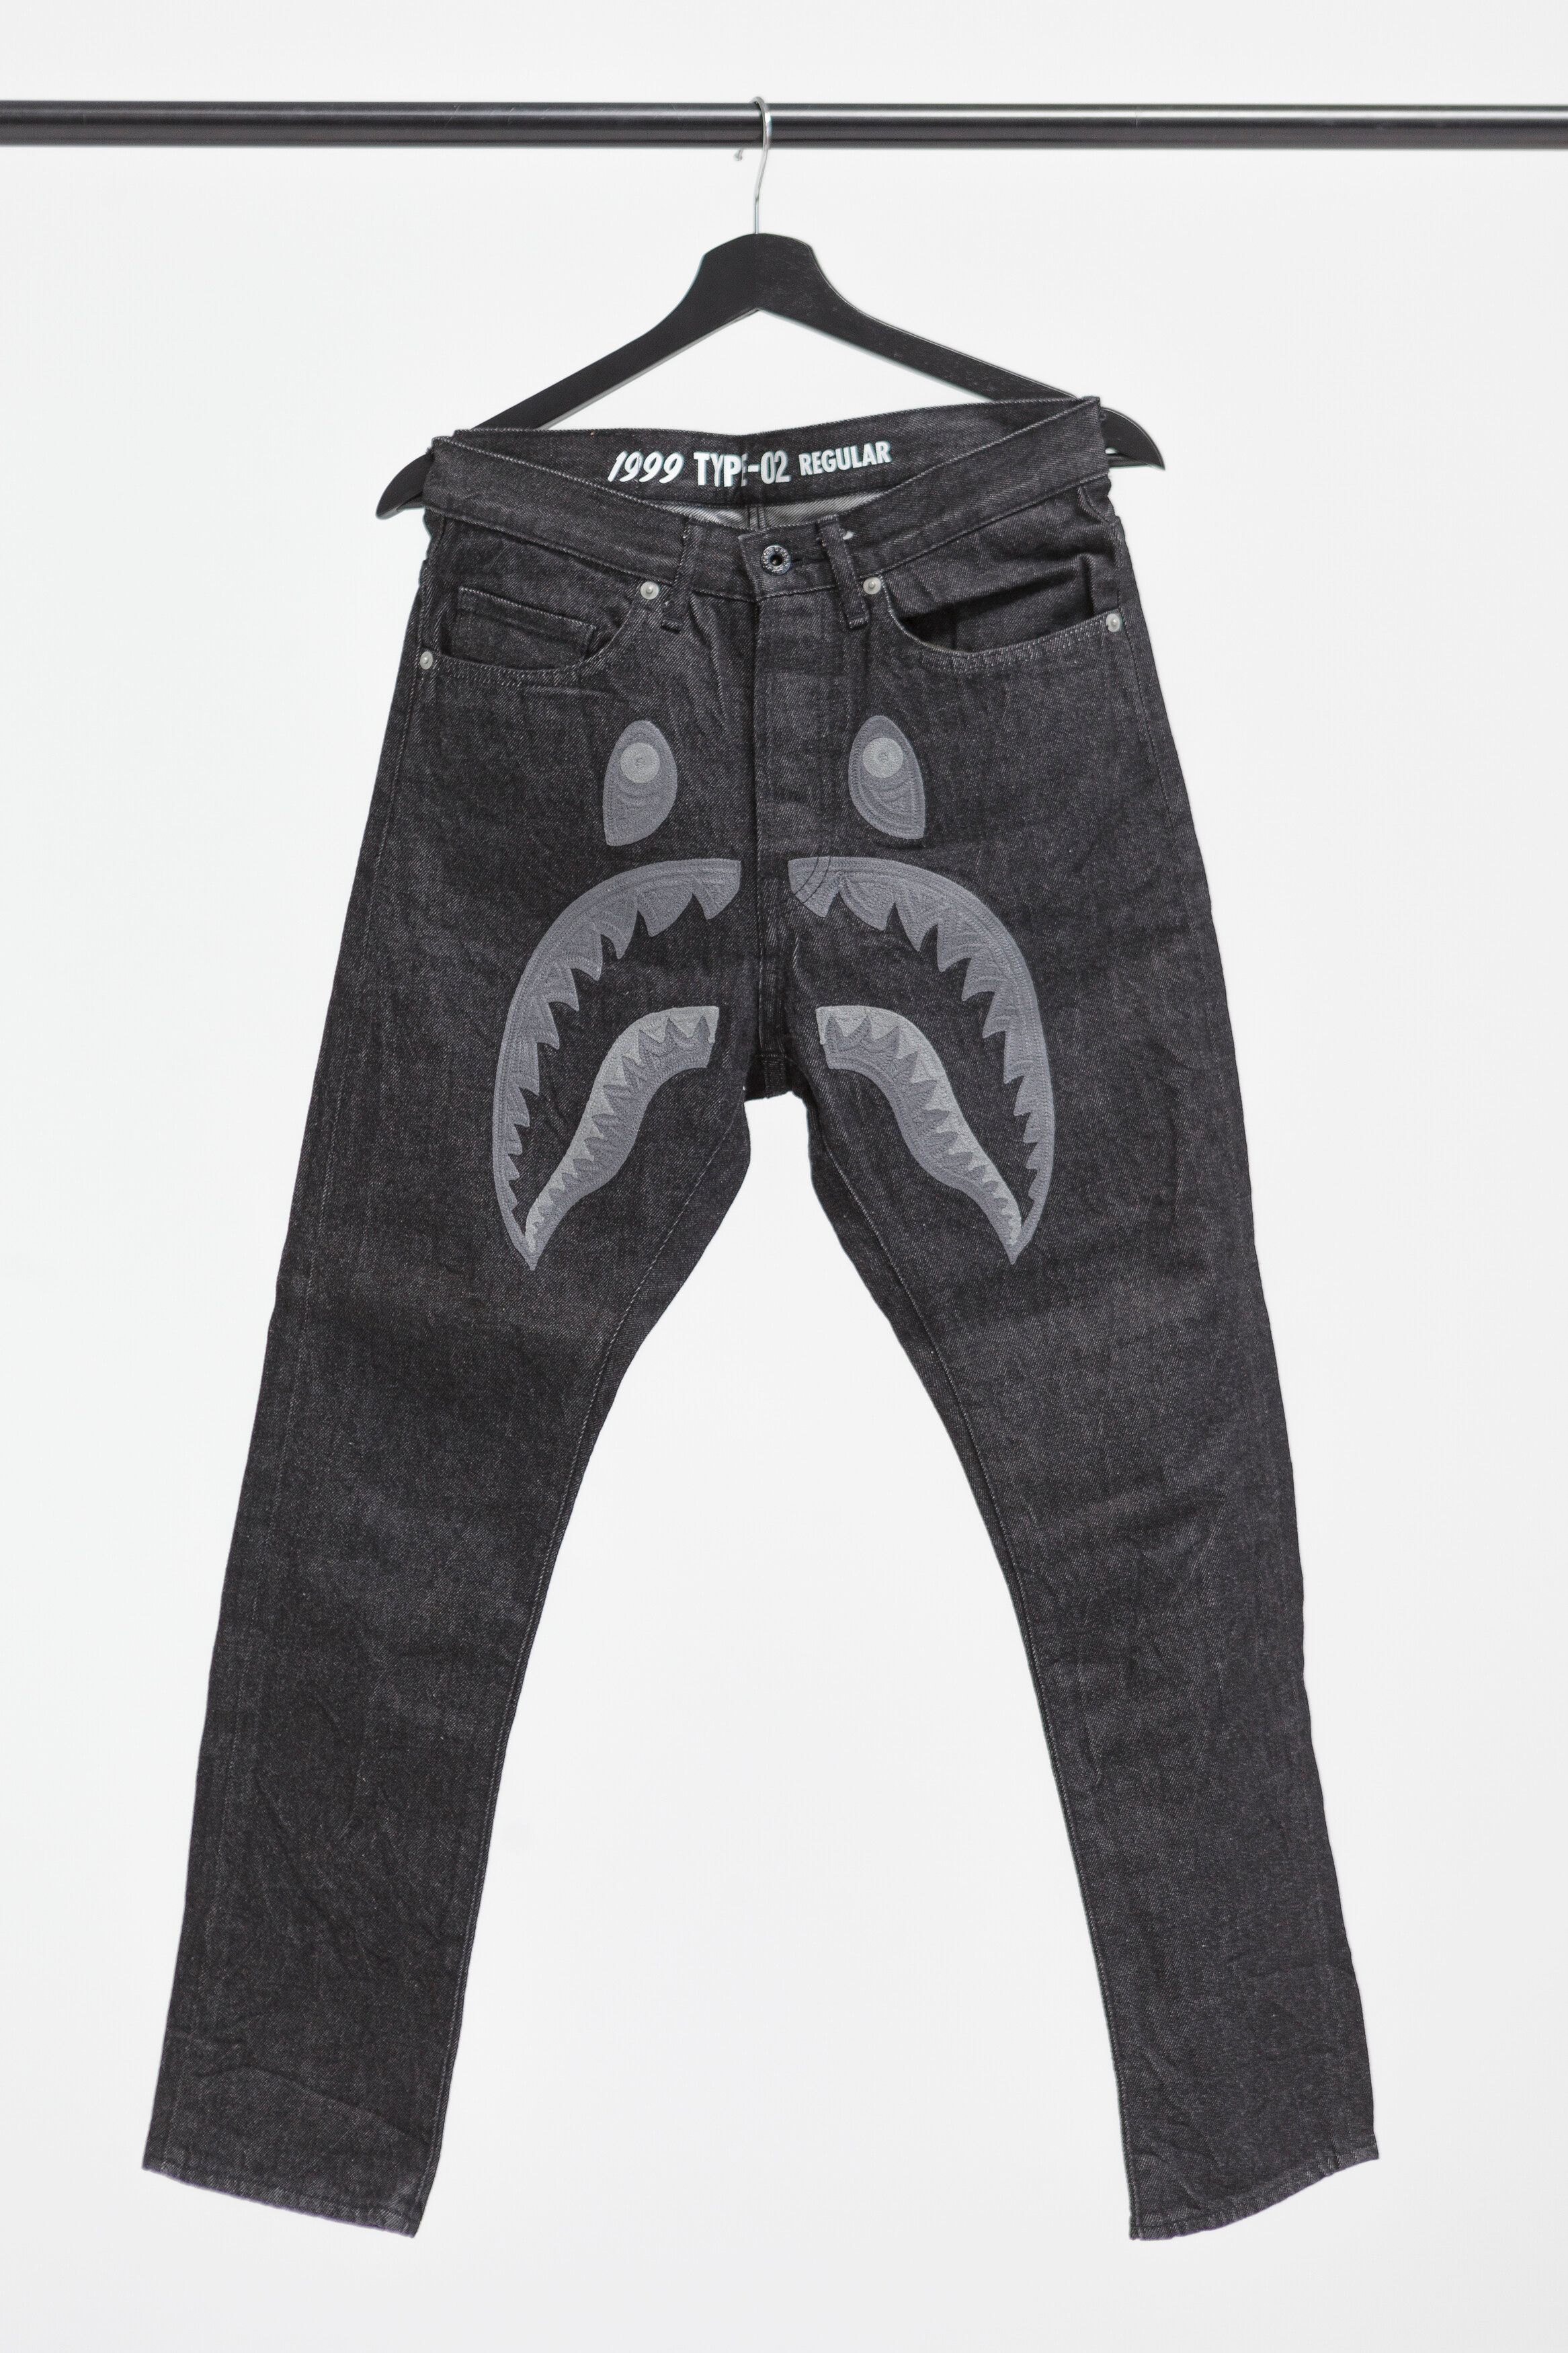 Bape A Bathing Ape Bape Denim Grey Shark Embroidery Logo Jeans Size US 30 / EU 46 - 1 Preview